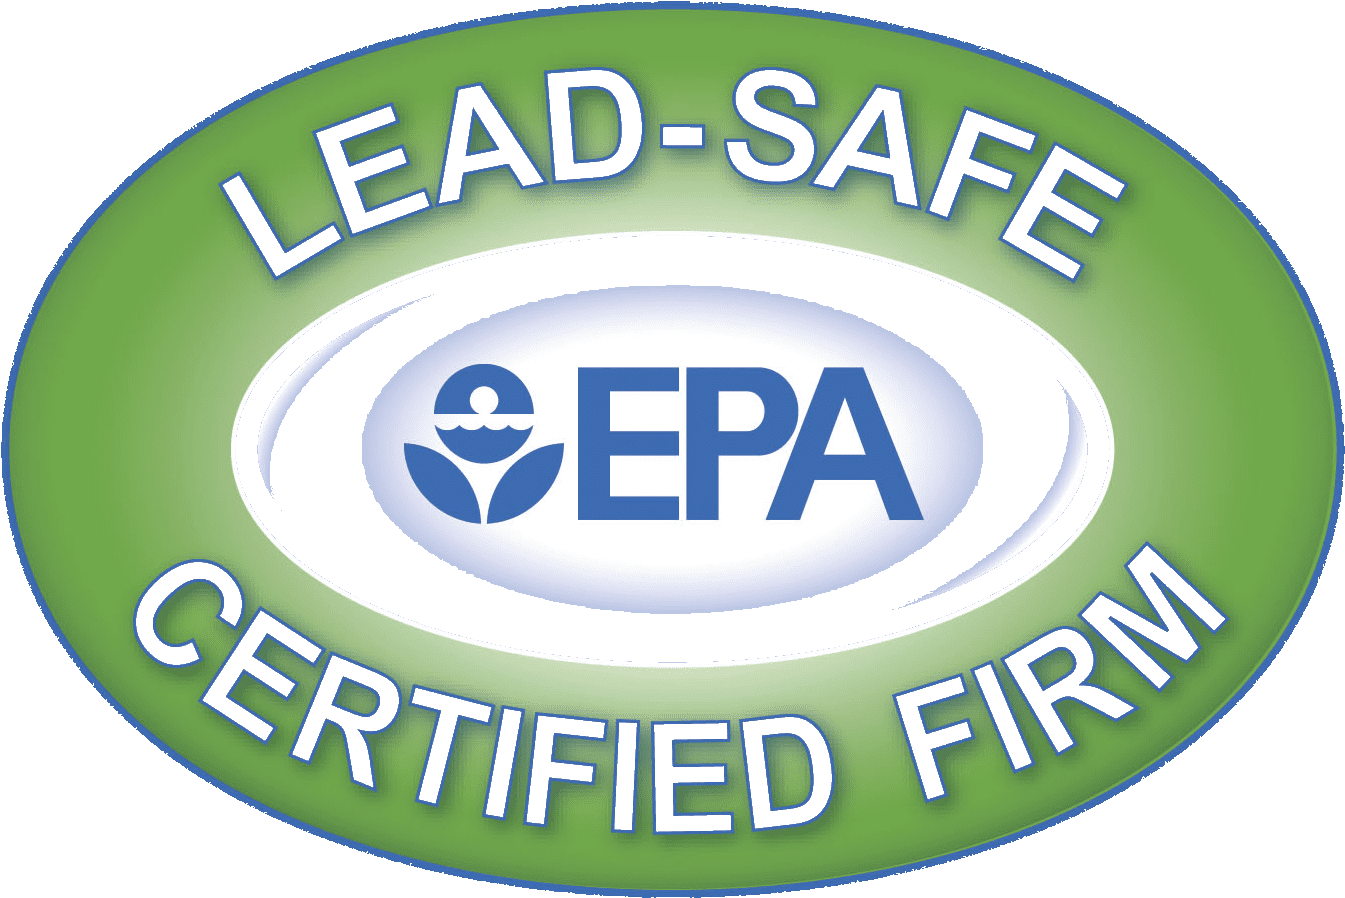 The EPA awarded Rain Guard OKC for being a lead-free gutter company in OKC, Edmond, & Norman OK for using lead free gutters.